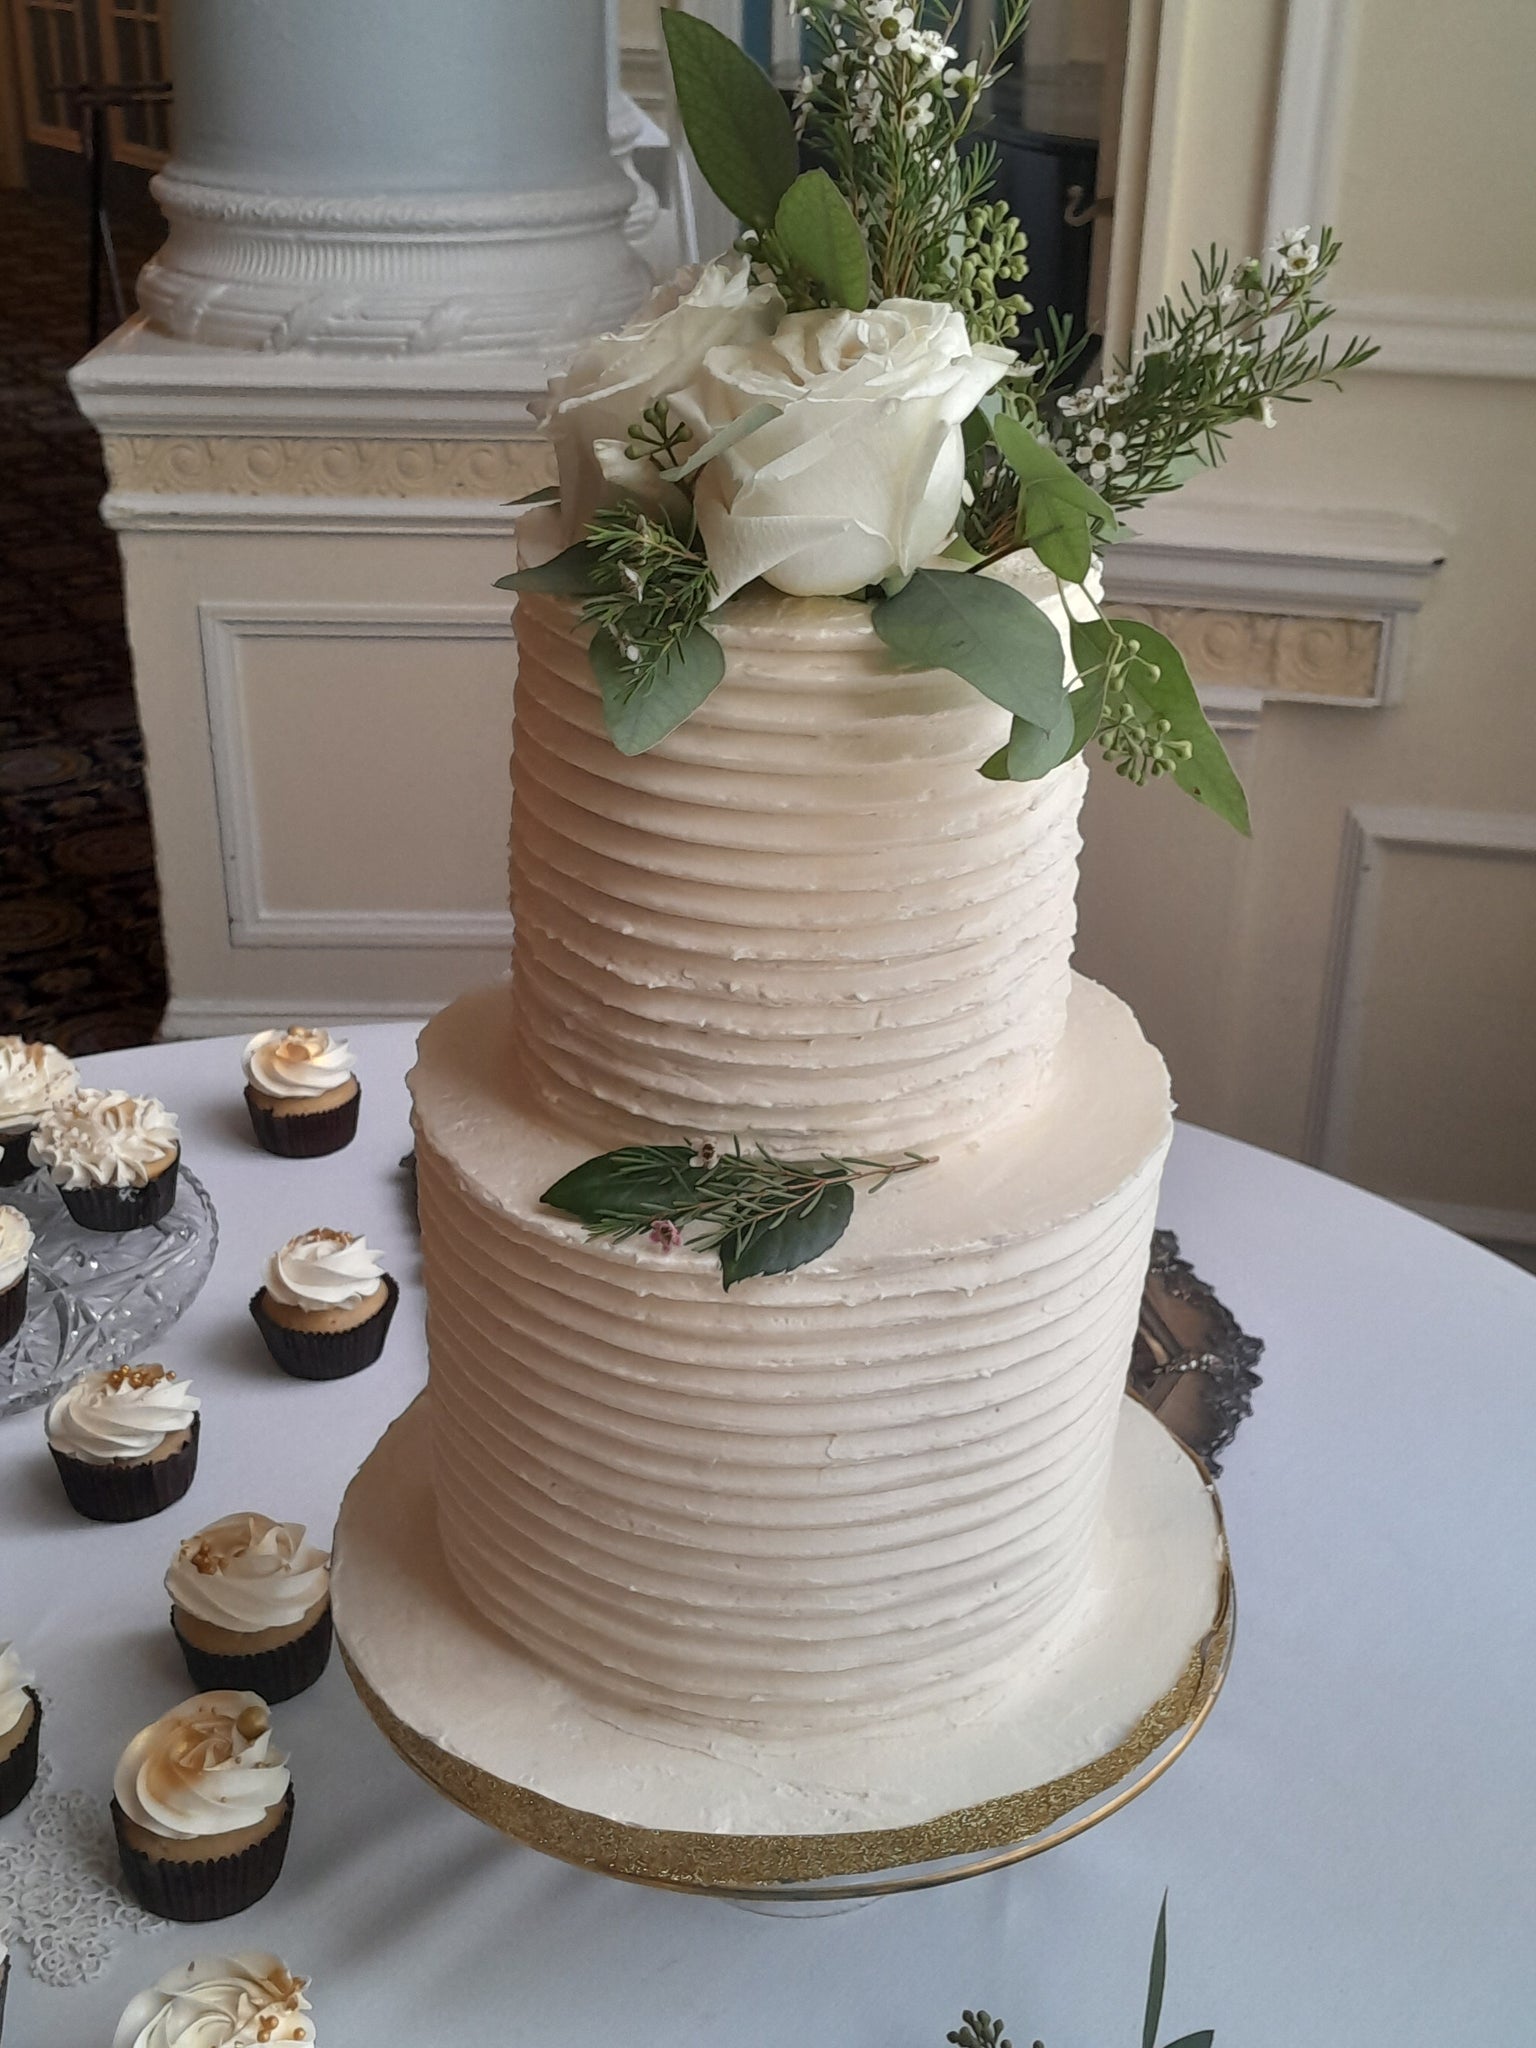 Royal Wedding Cake for venue in Ireland | eBay